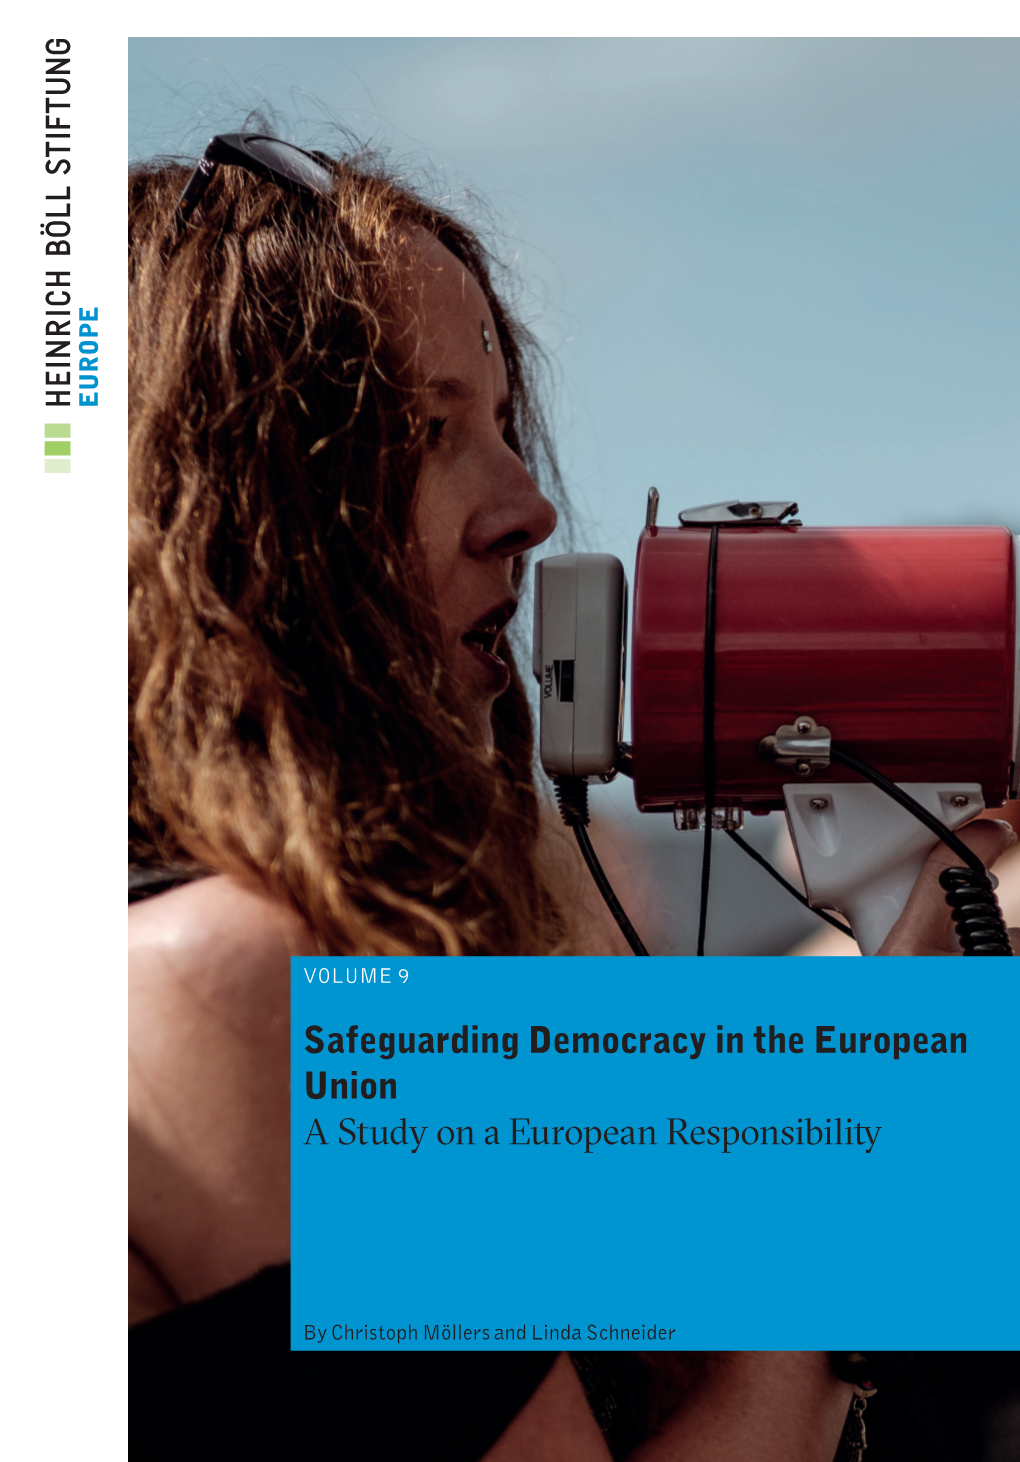 Safeguarding Democracy in the European Union a Study on a European Responsibility